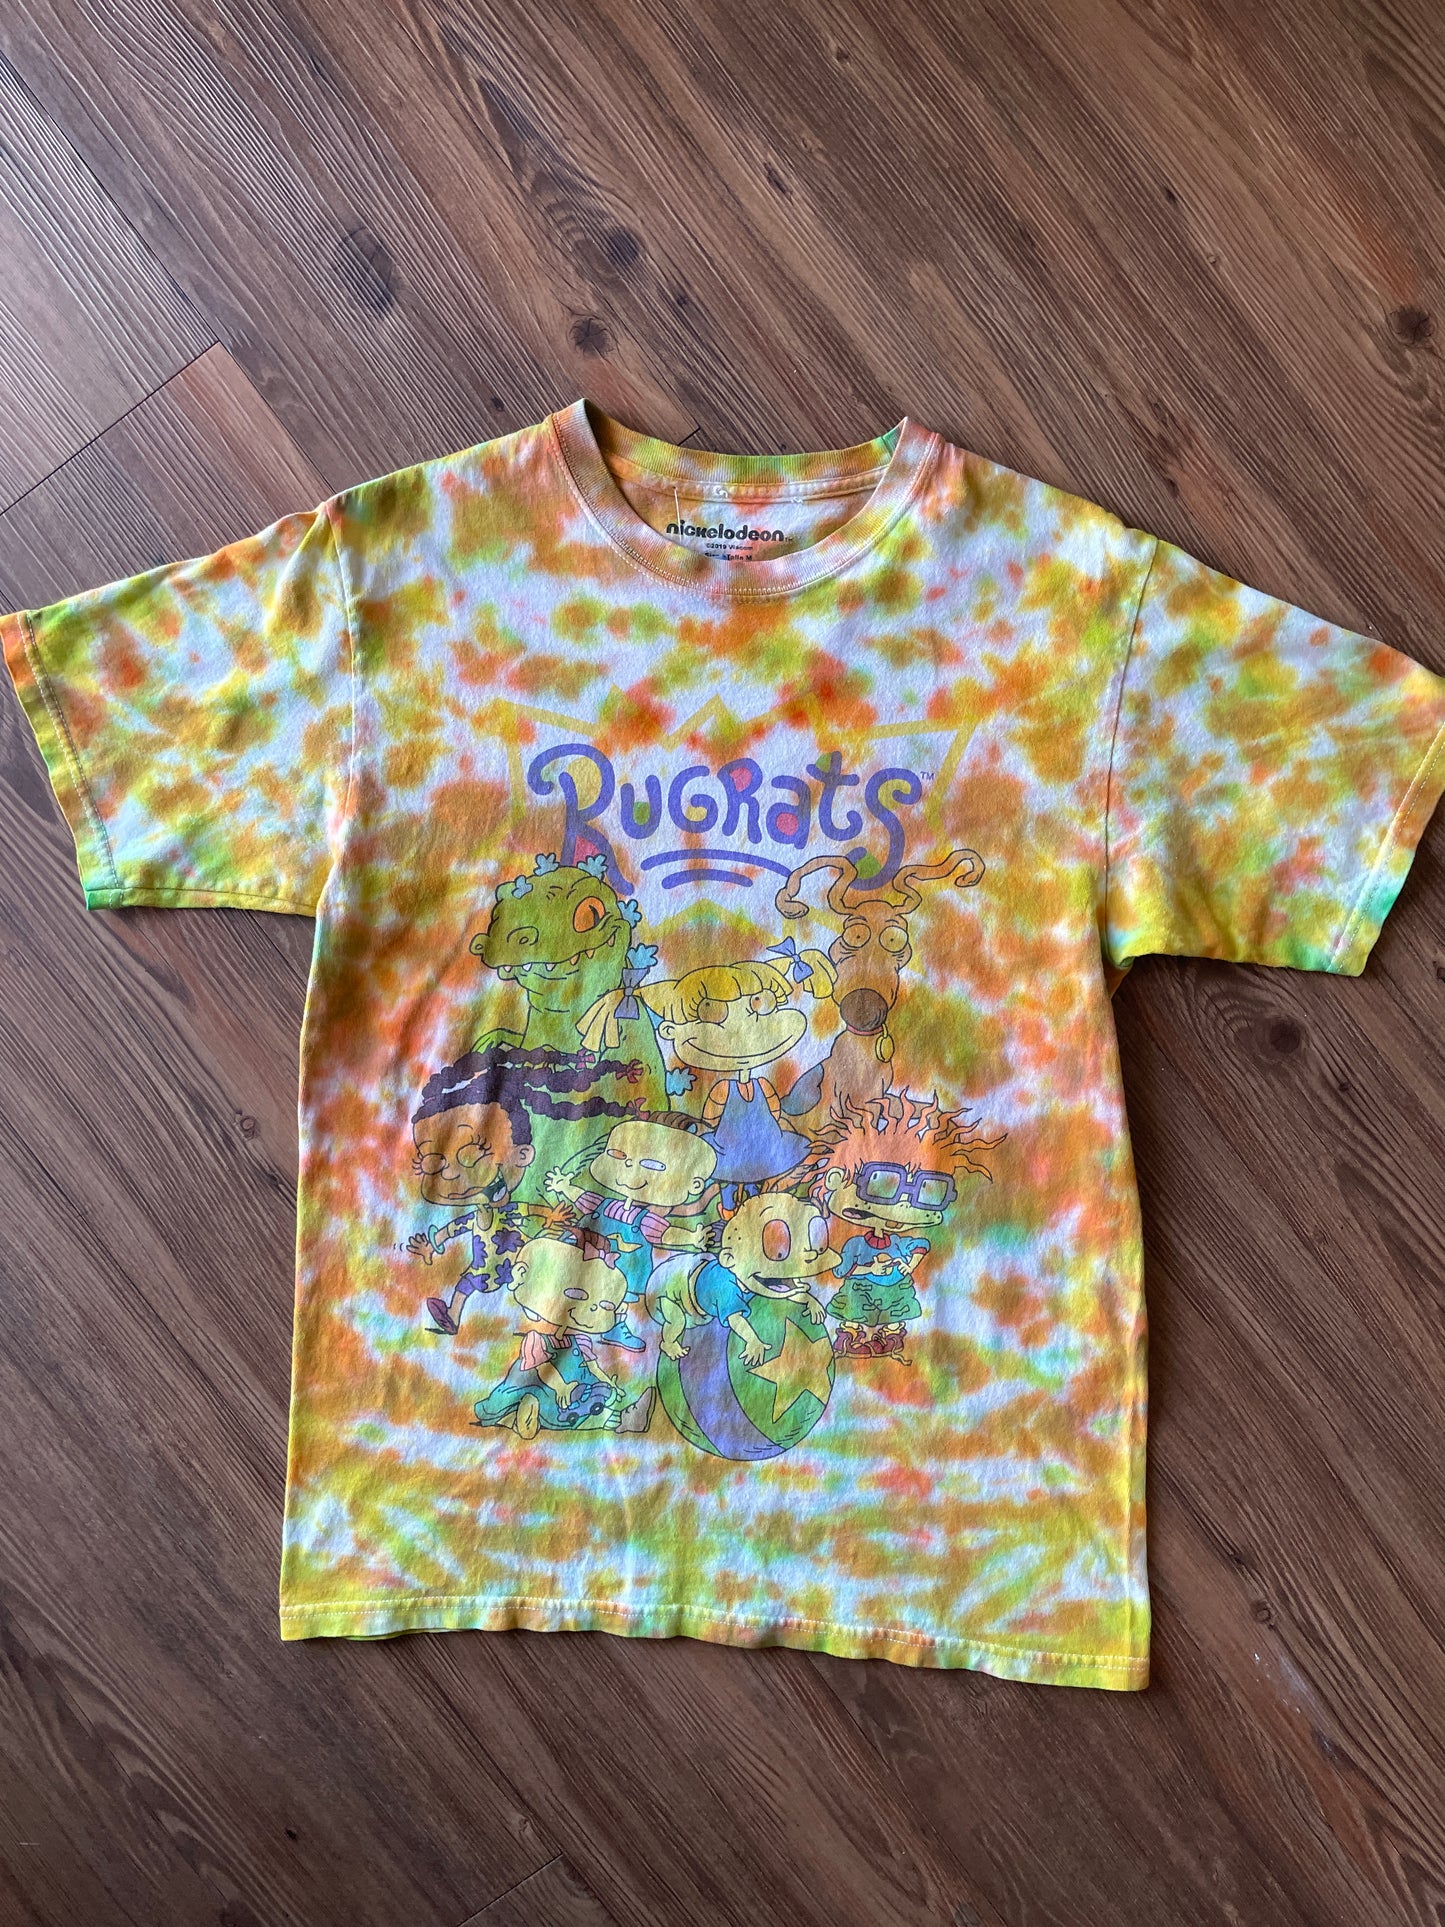 Medium Men’s Rugrats Handmade Tie Dye T-Shirt | Green and Orange 90s Nickelodeon Slime Tie Dye Short Sleeve